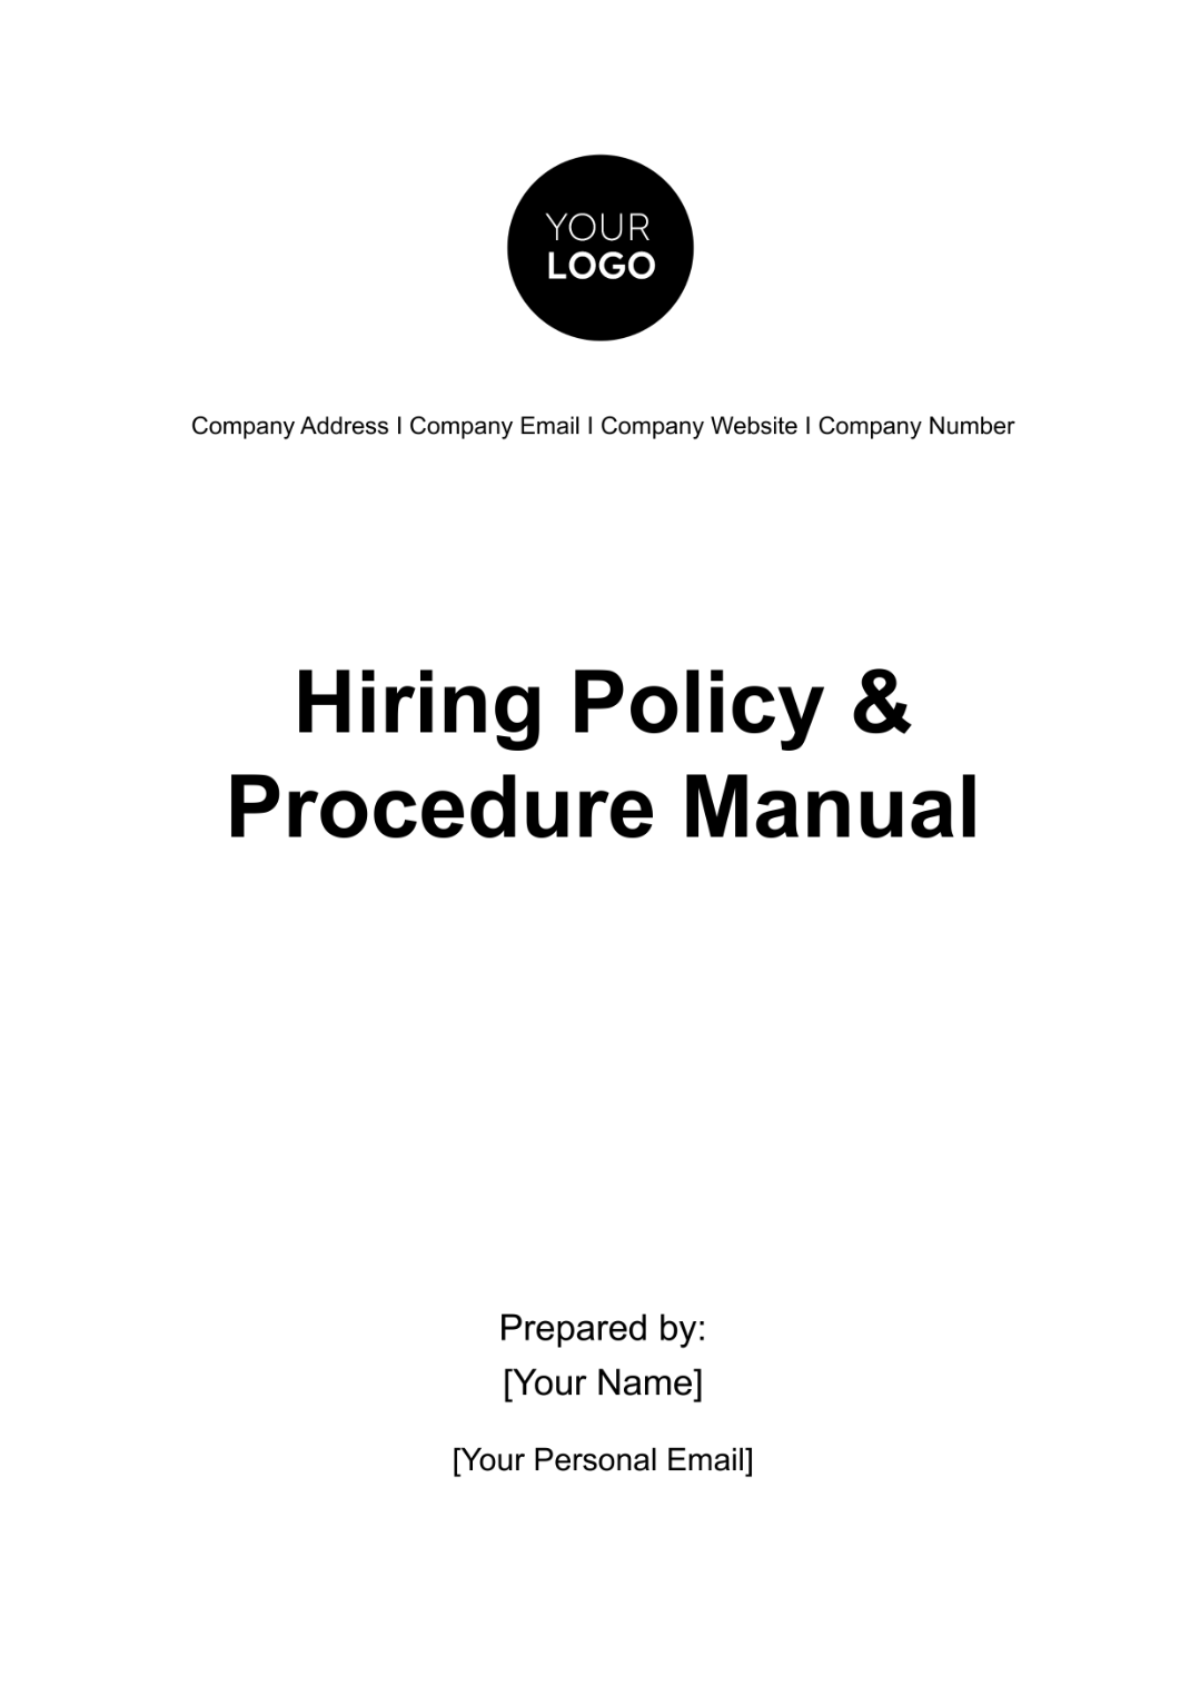 Hiring Policy & Procedure Manual HR Template